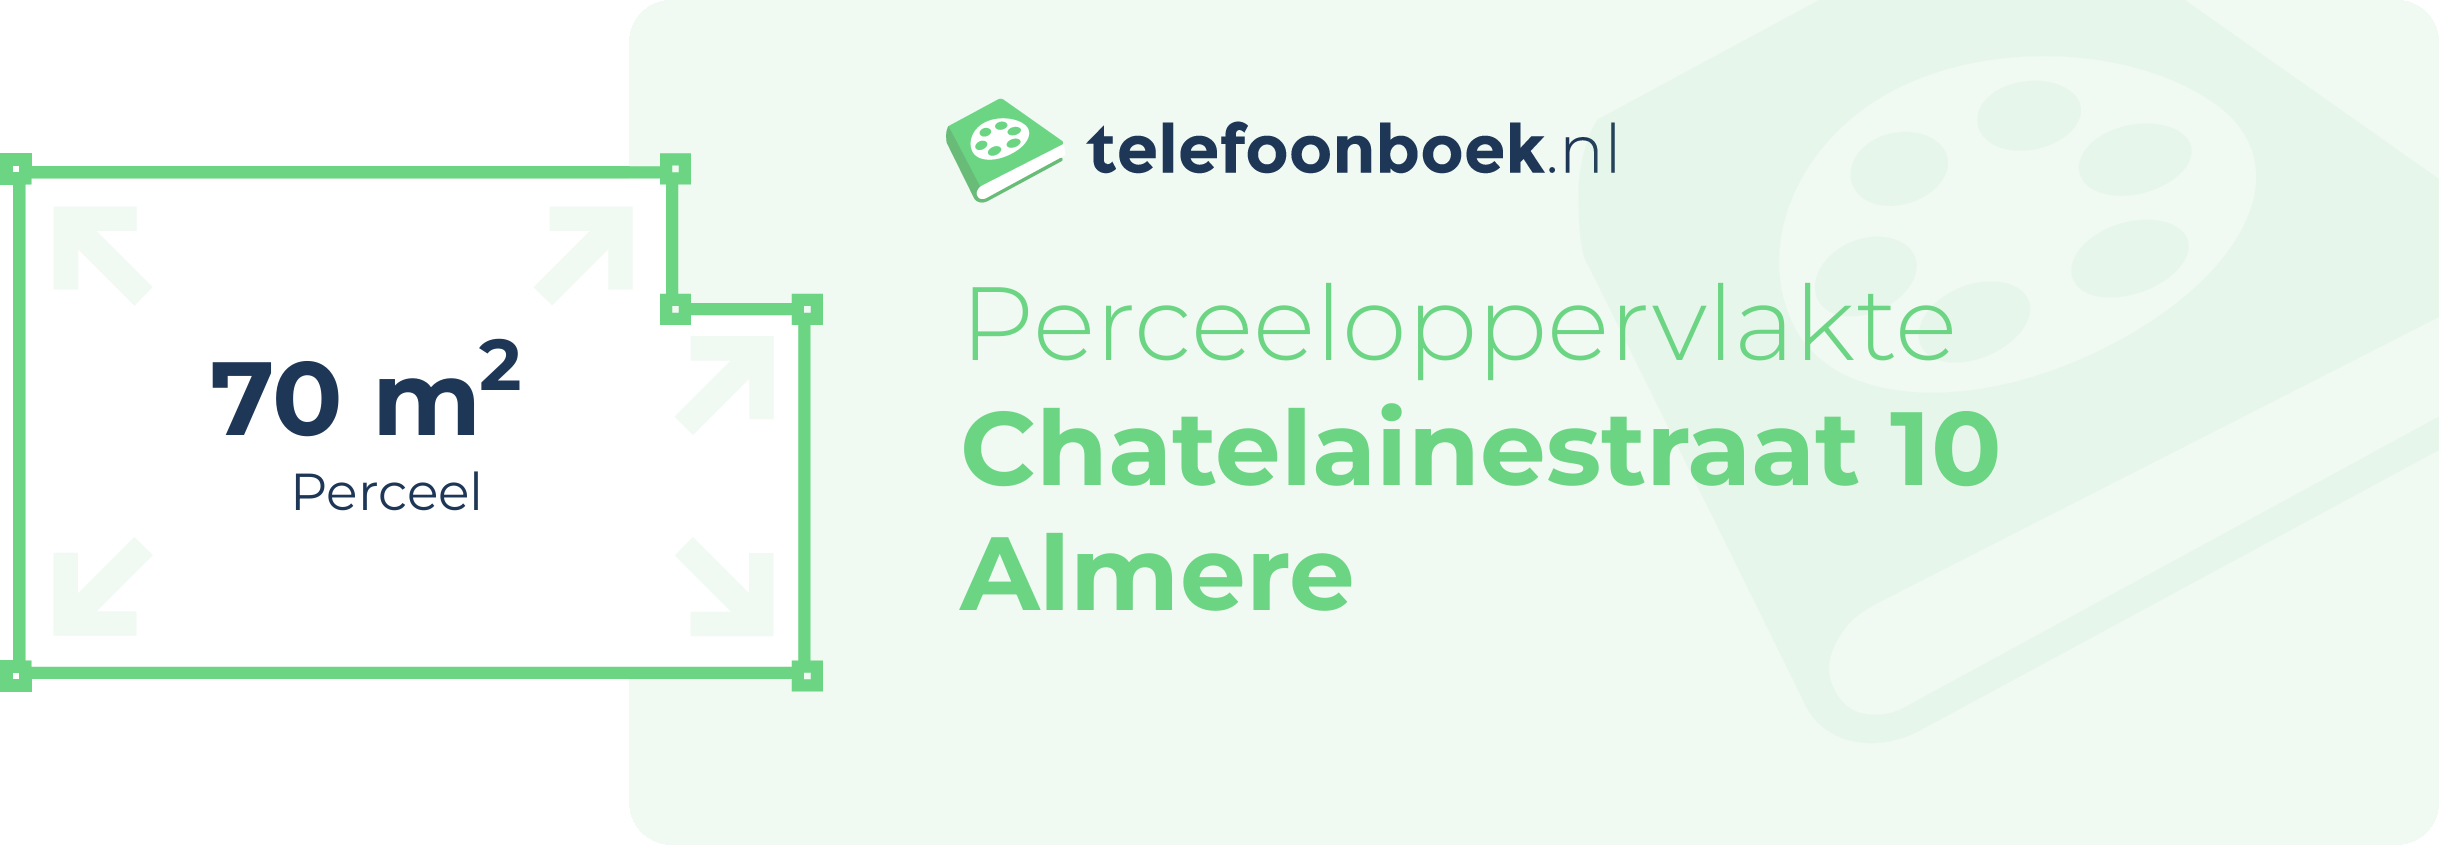 Perceeloppervlakte Chatelainestraat 10 Almere